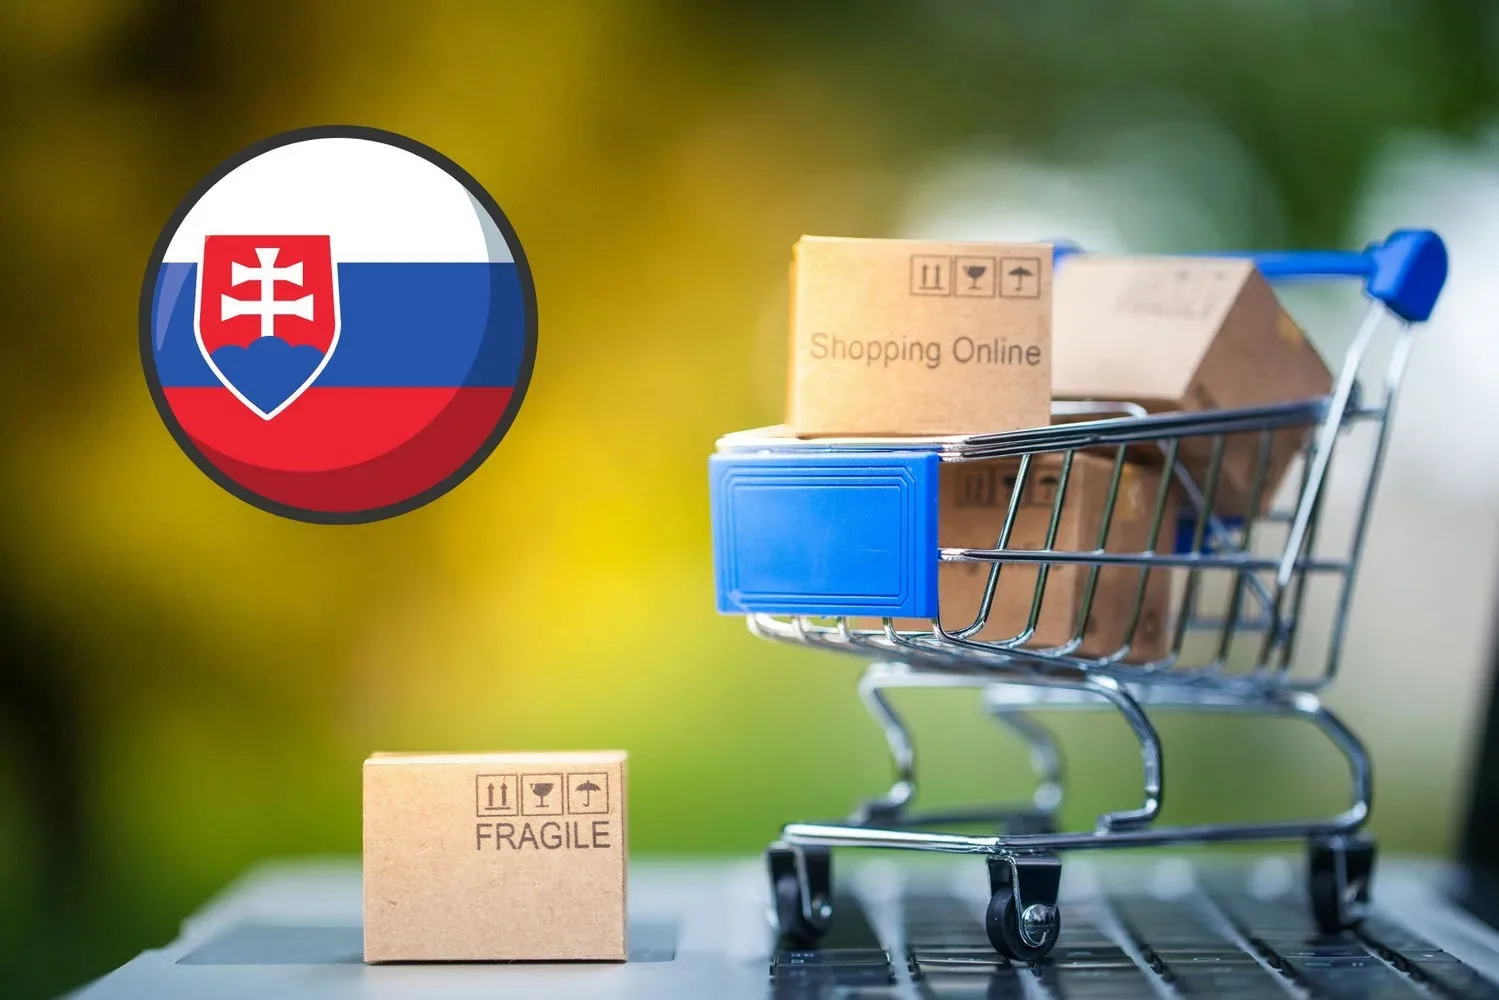 slovensko online nakupovanie jpg webp